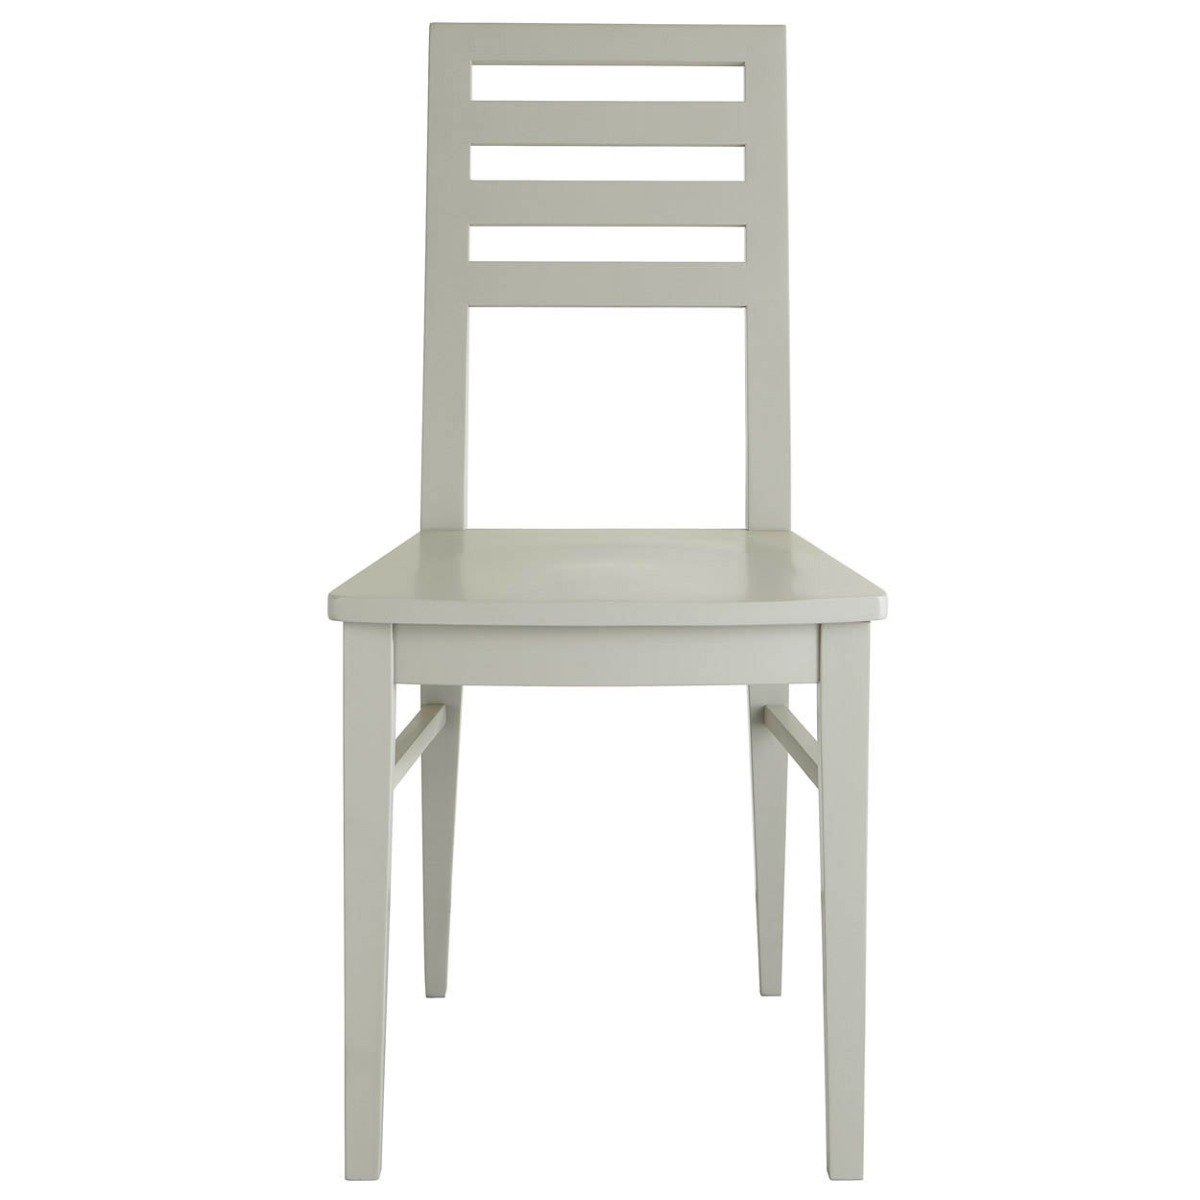 Pippin Ladderback Chair, Grey | Barker & Stonehouse